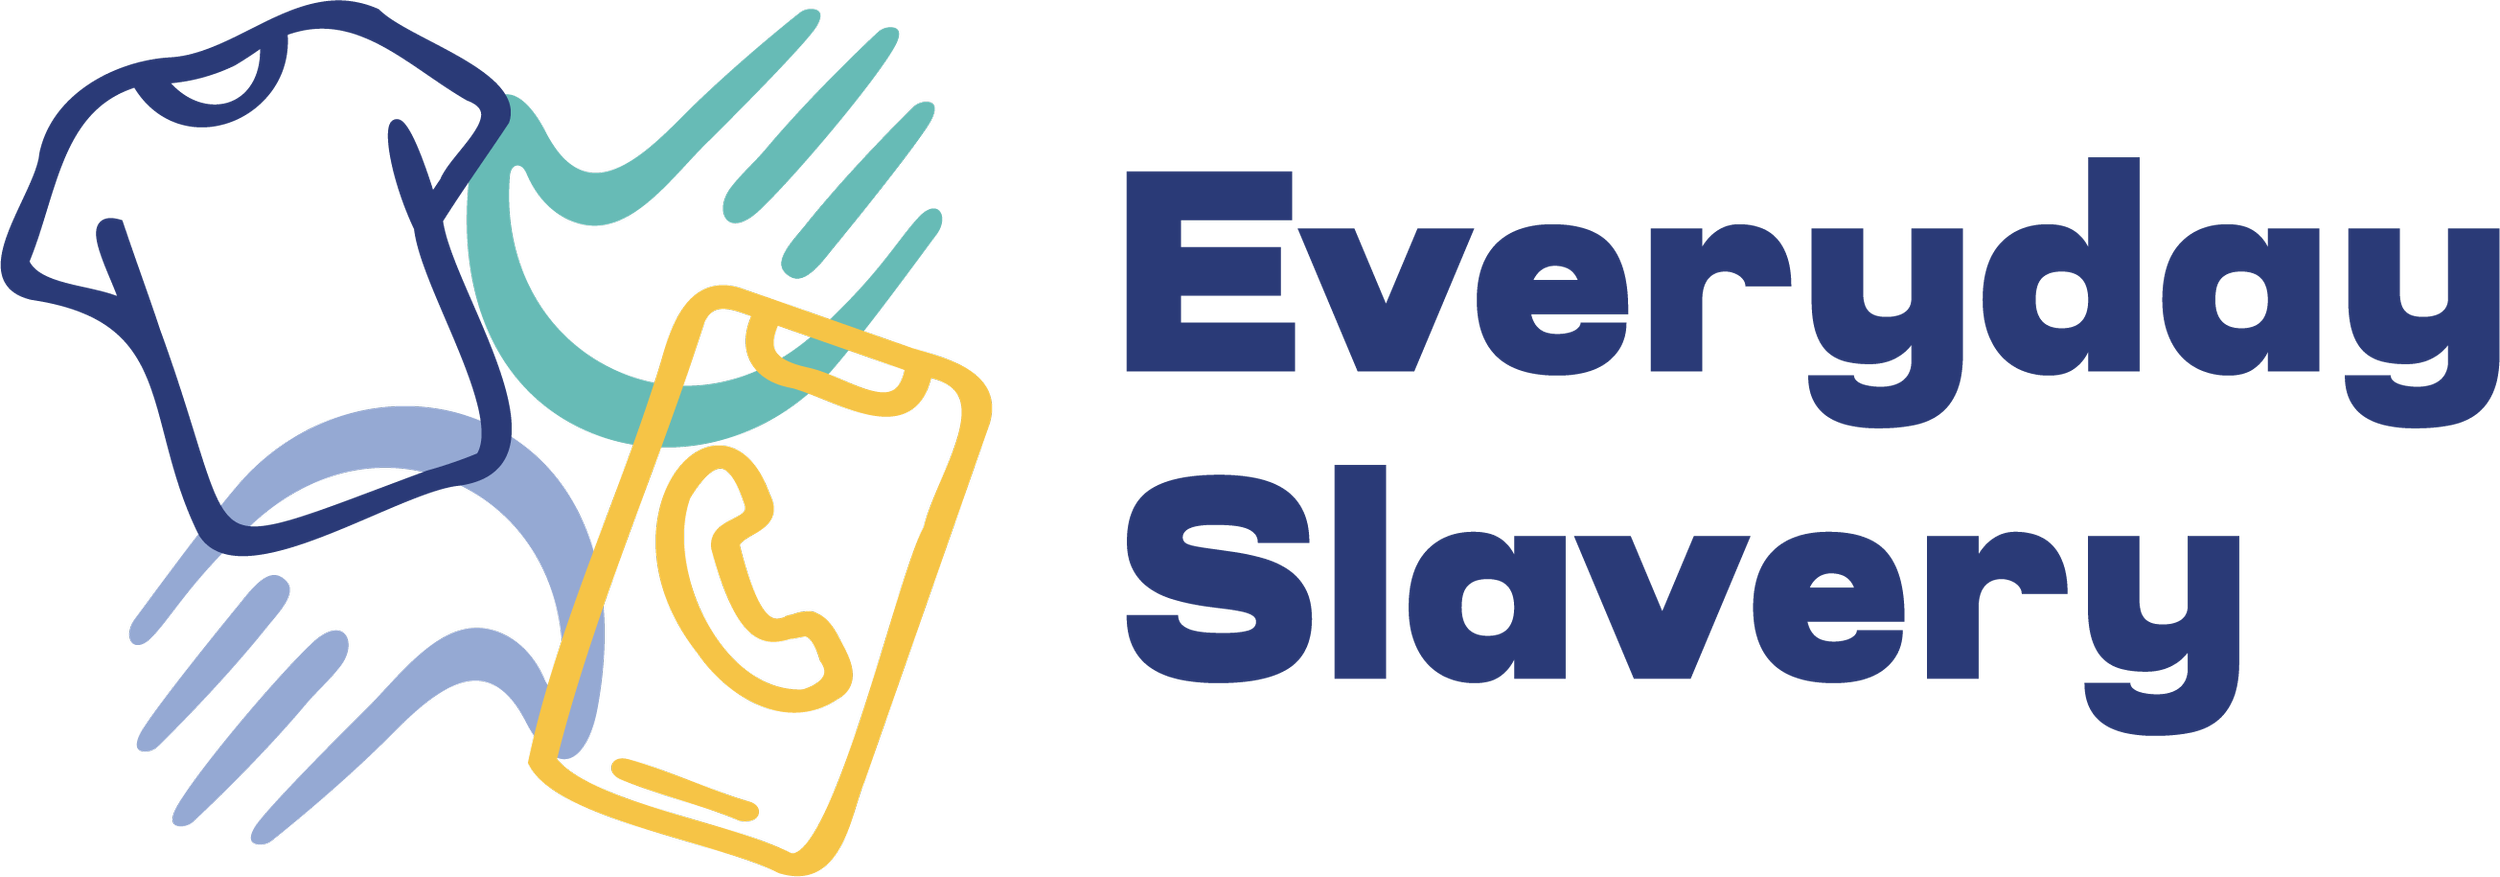 Everyday_slavery_Horizontal_Main.png